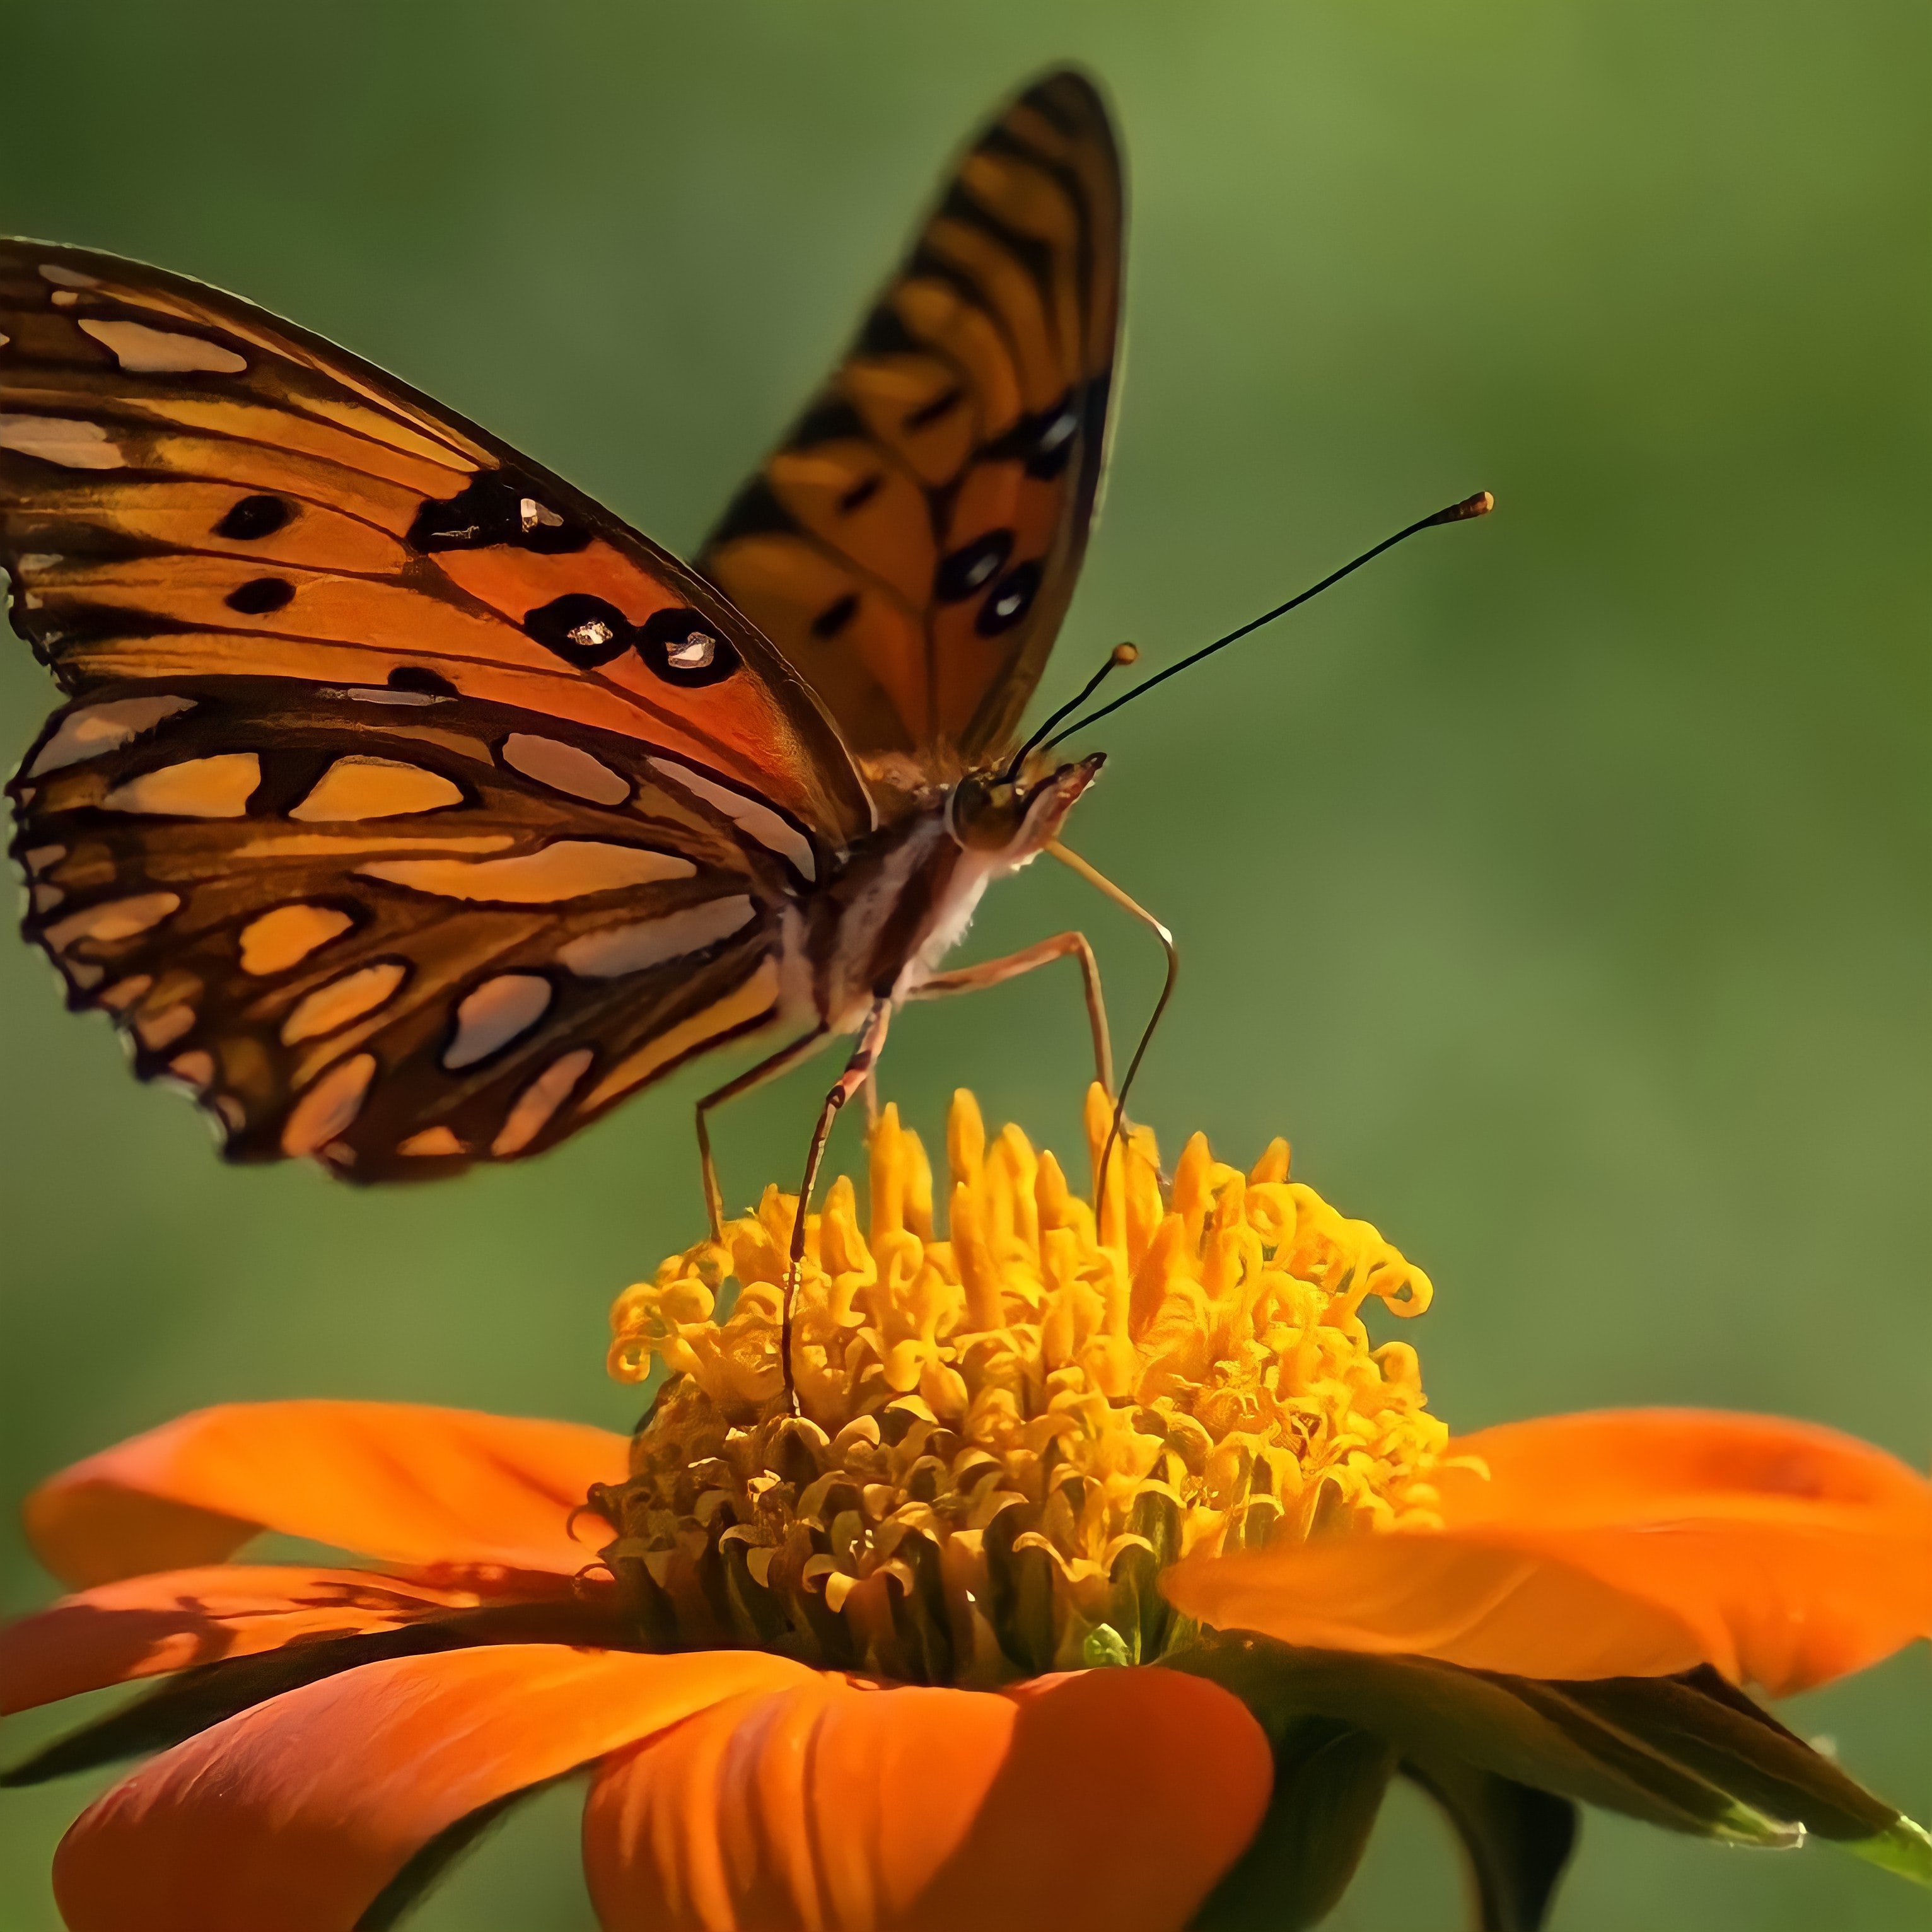 Gulf Fritillary Butterfly taken at Florida Botanical Gardens by Becky Winner via Unsplash